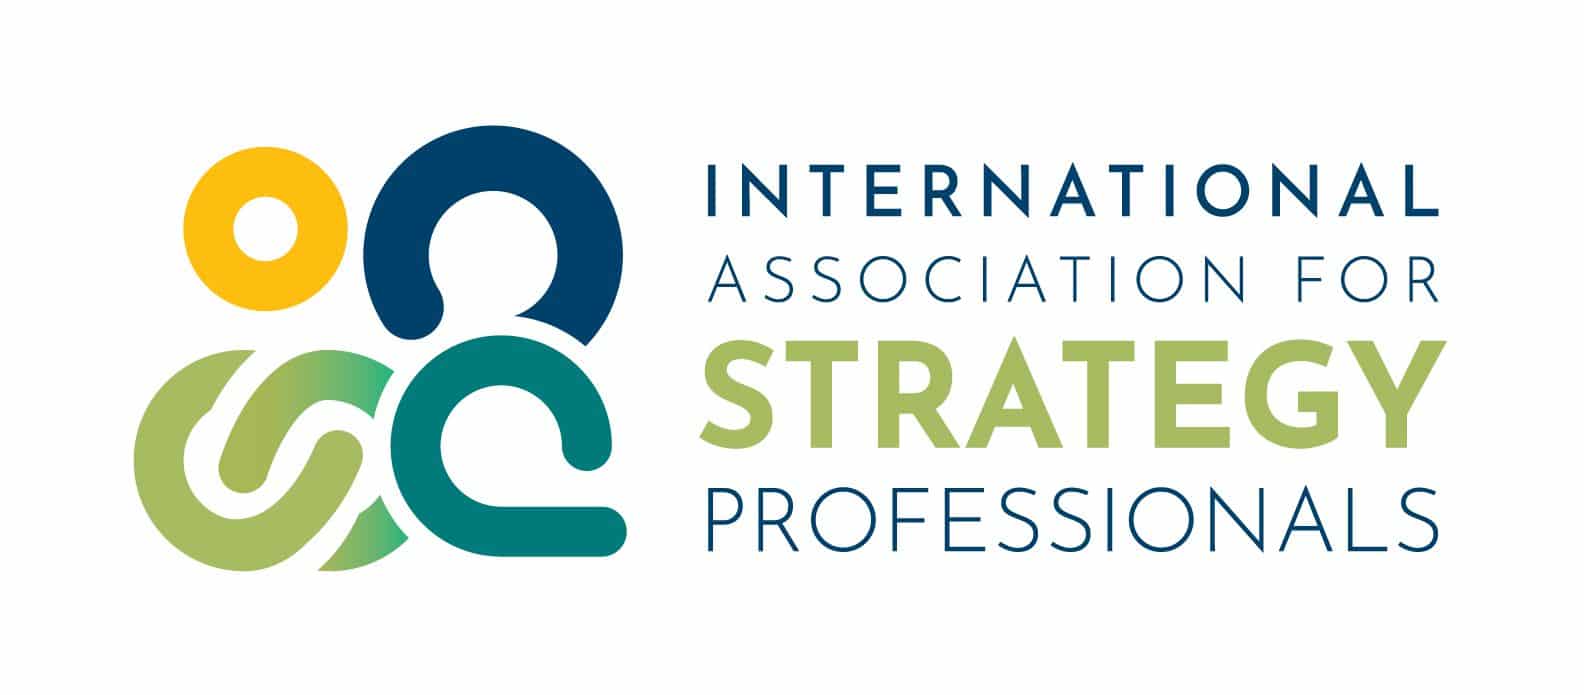 International International Association for Strategy Professionals